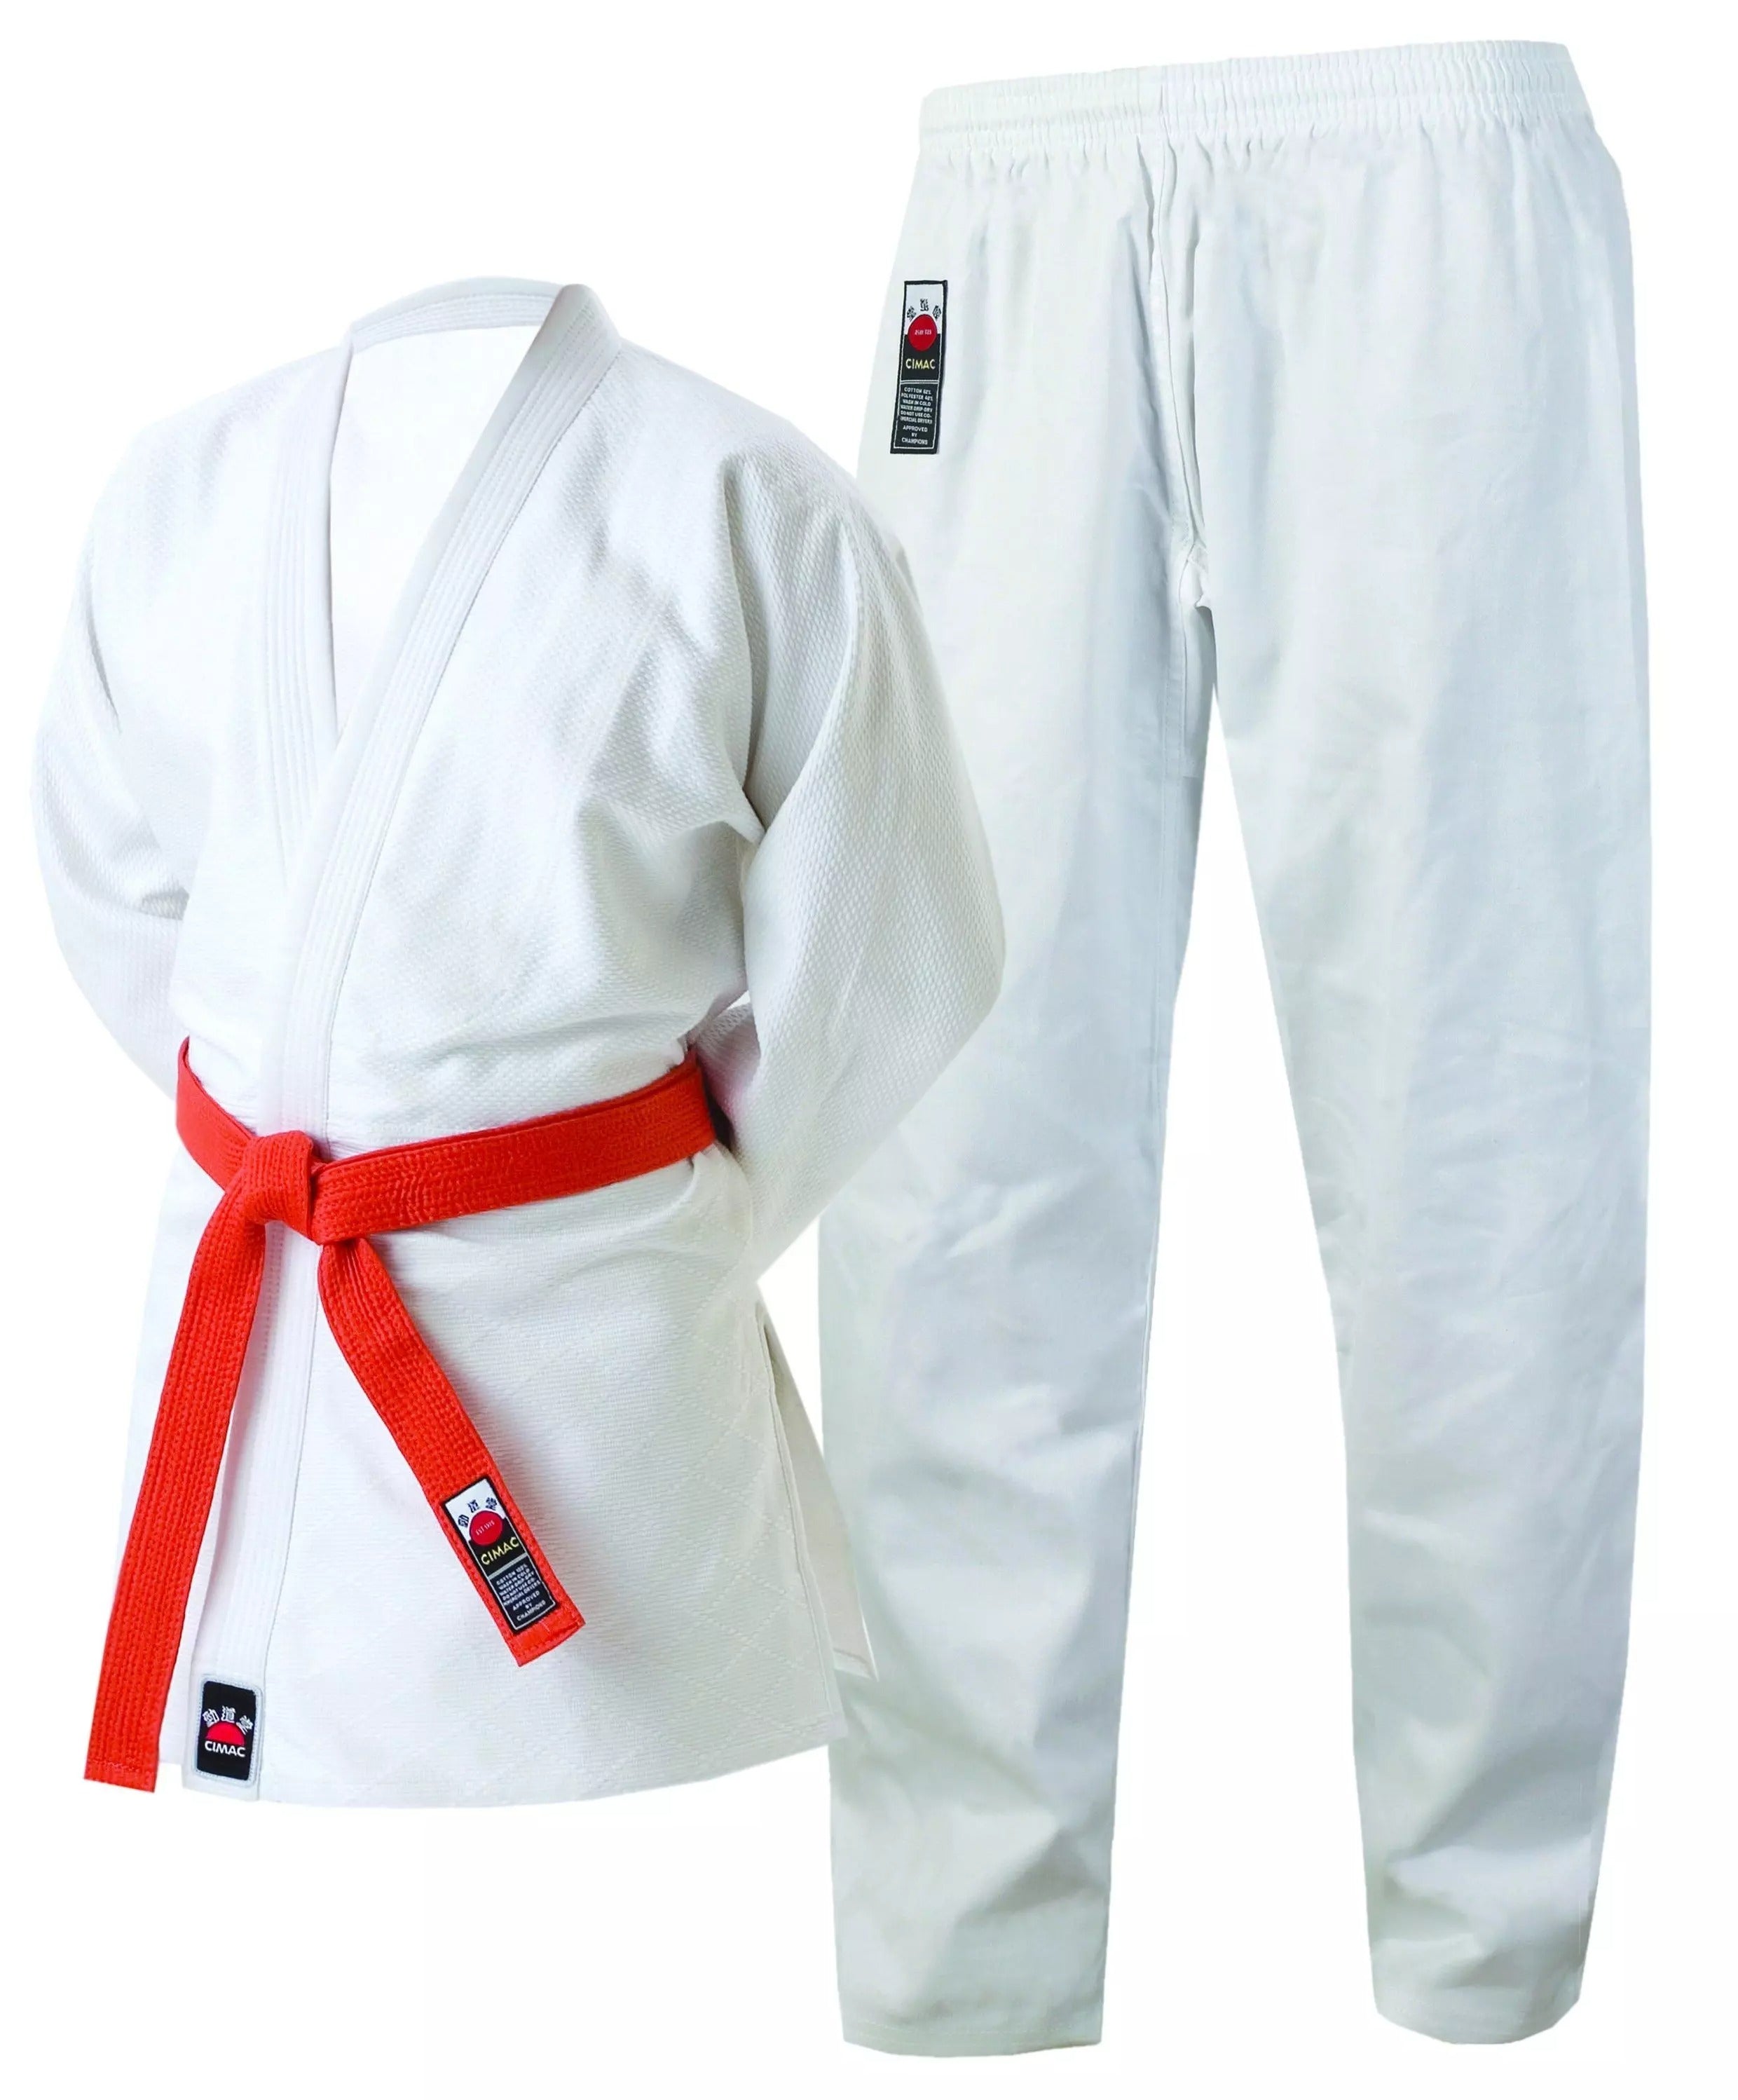 Cimac Kids Judo Gi Suit 9oz Uniform & White Belt